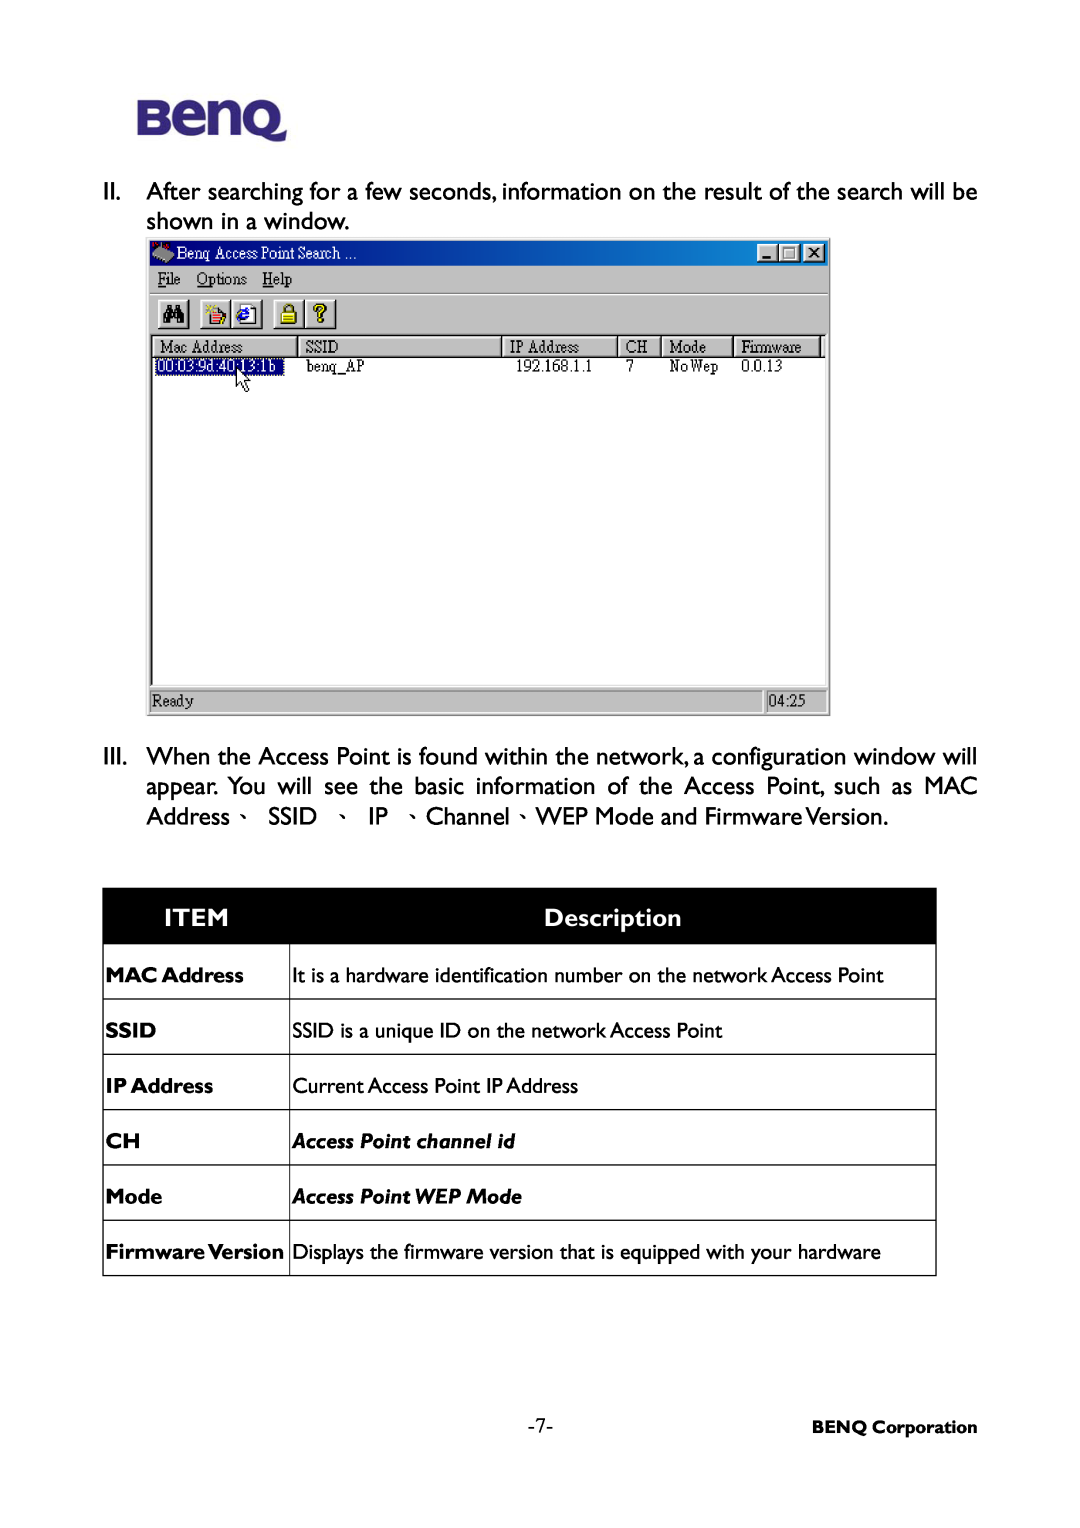 BenQ AWL-500 user manual Description, MAC Address, Ssid, IP Address, Mode, Firmware Version 